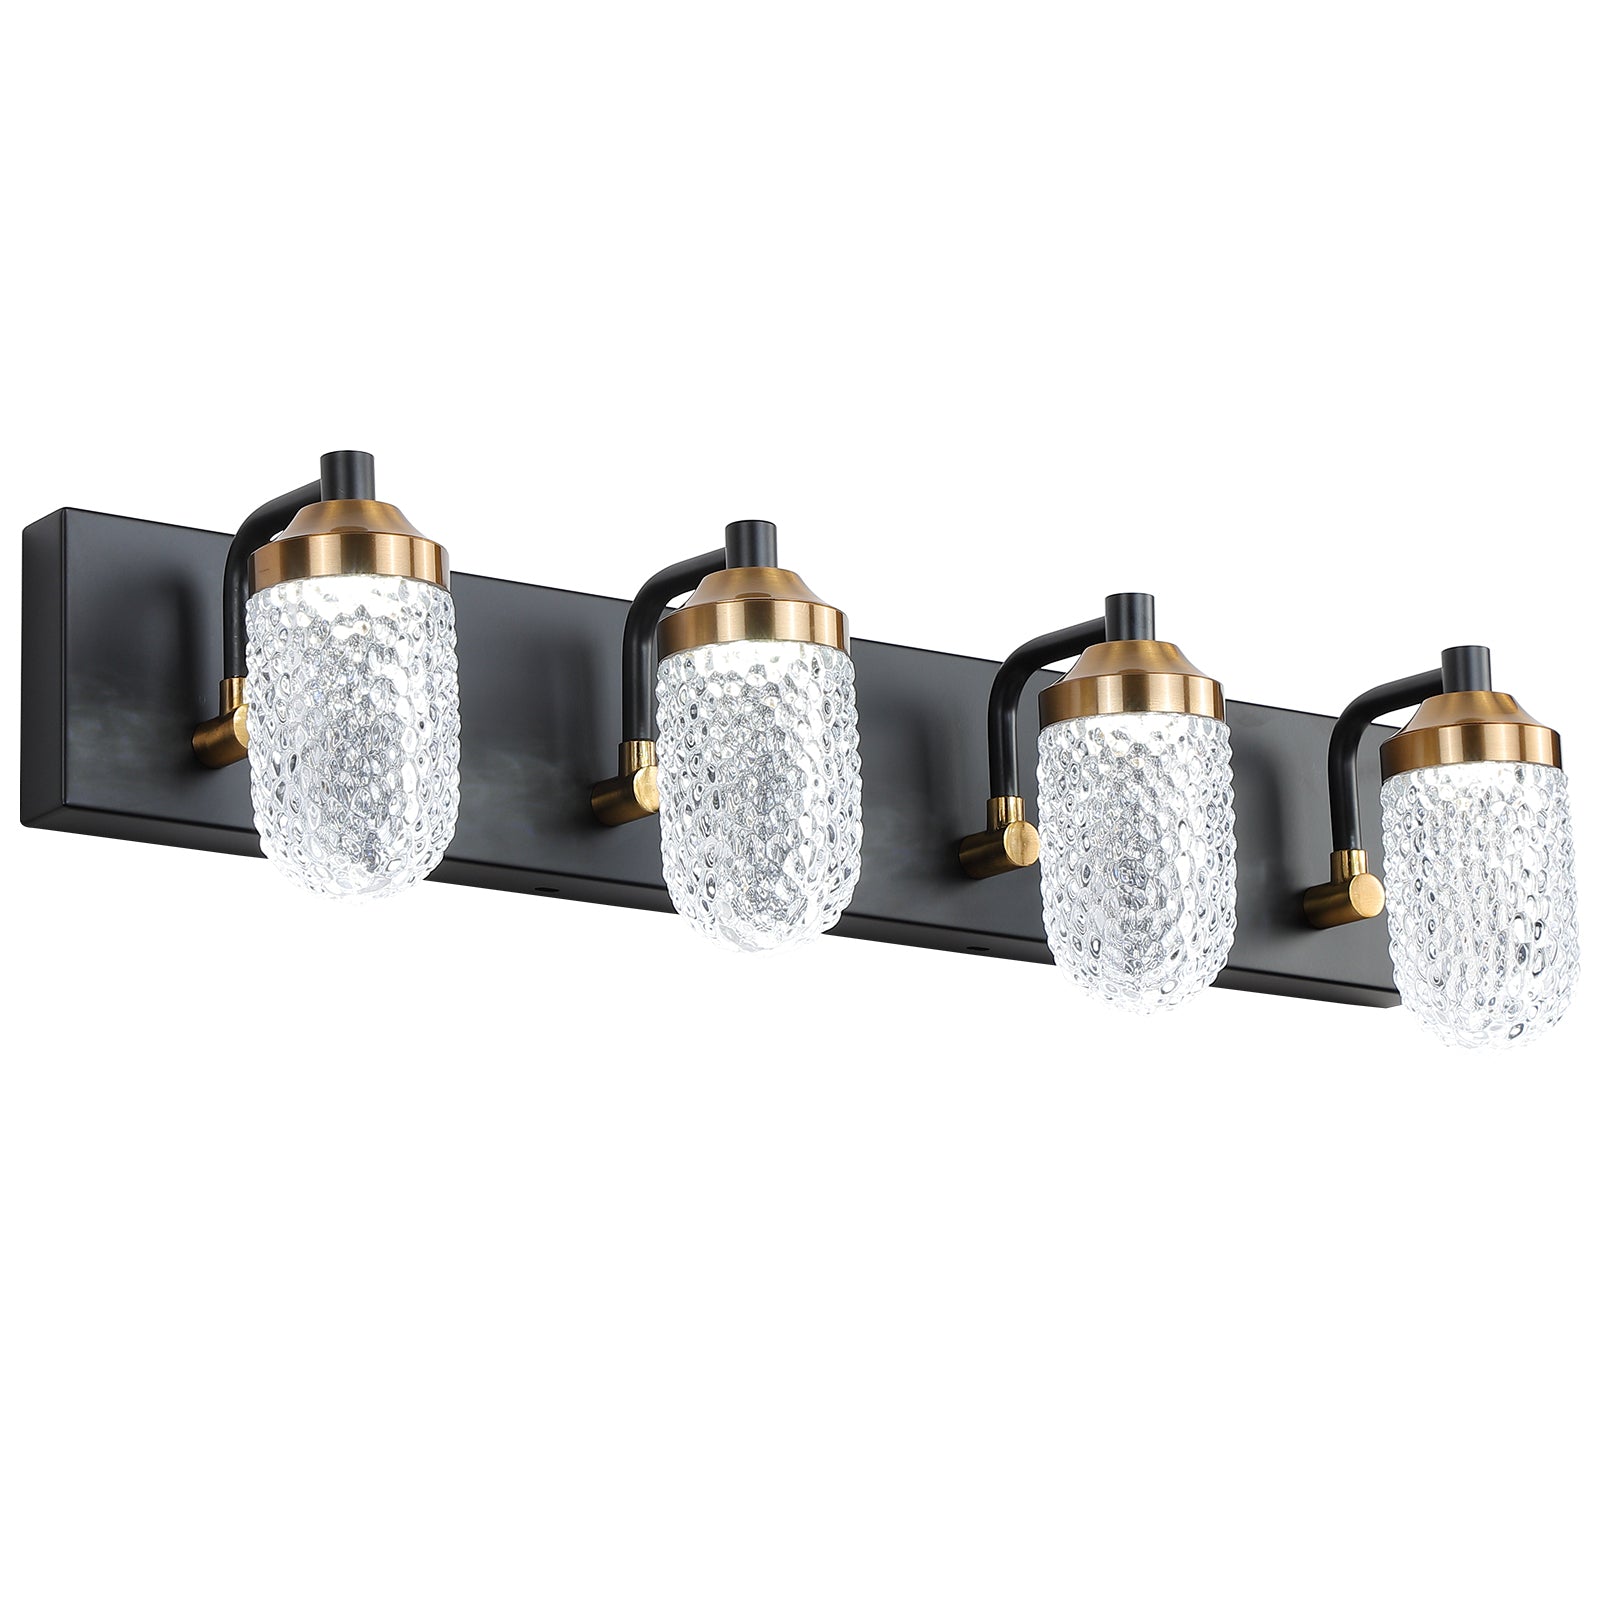 Vanity Lights With 4 LED Bulbs For Bathroom Lighting - black